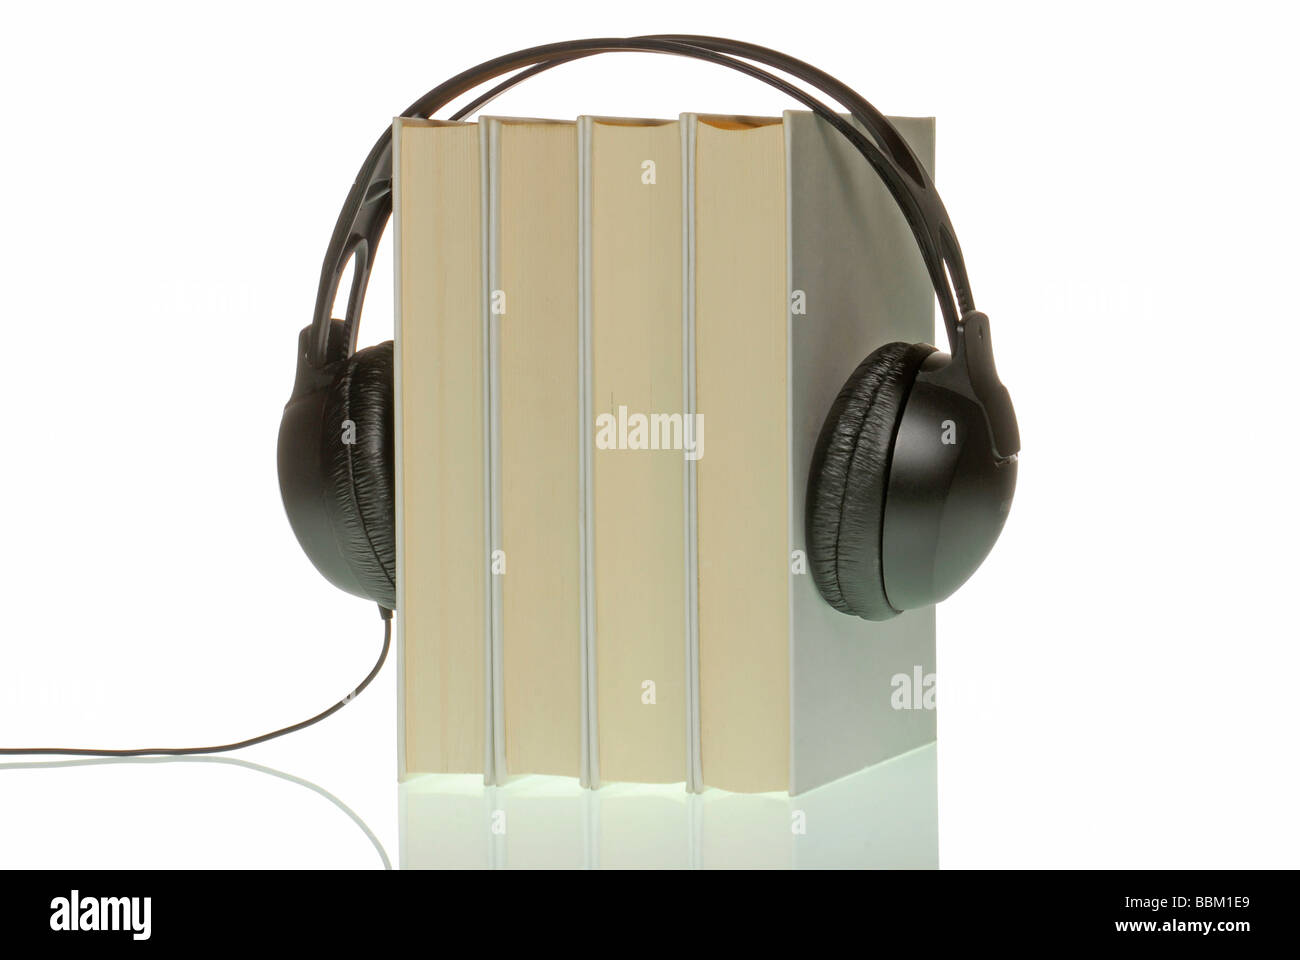 Headphones on four books, symbolic for audiobooks Stock Photo